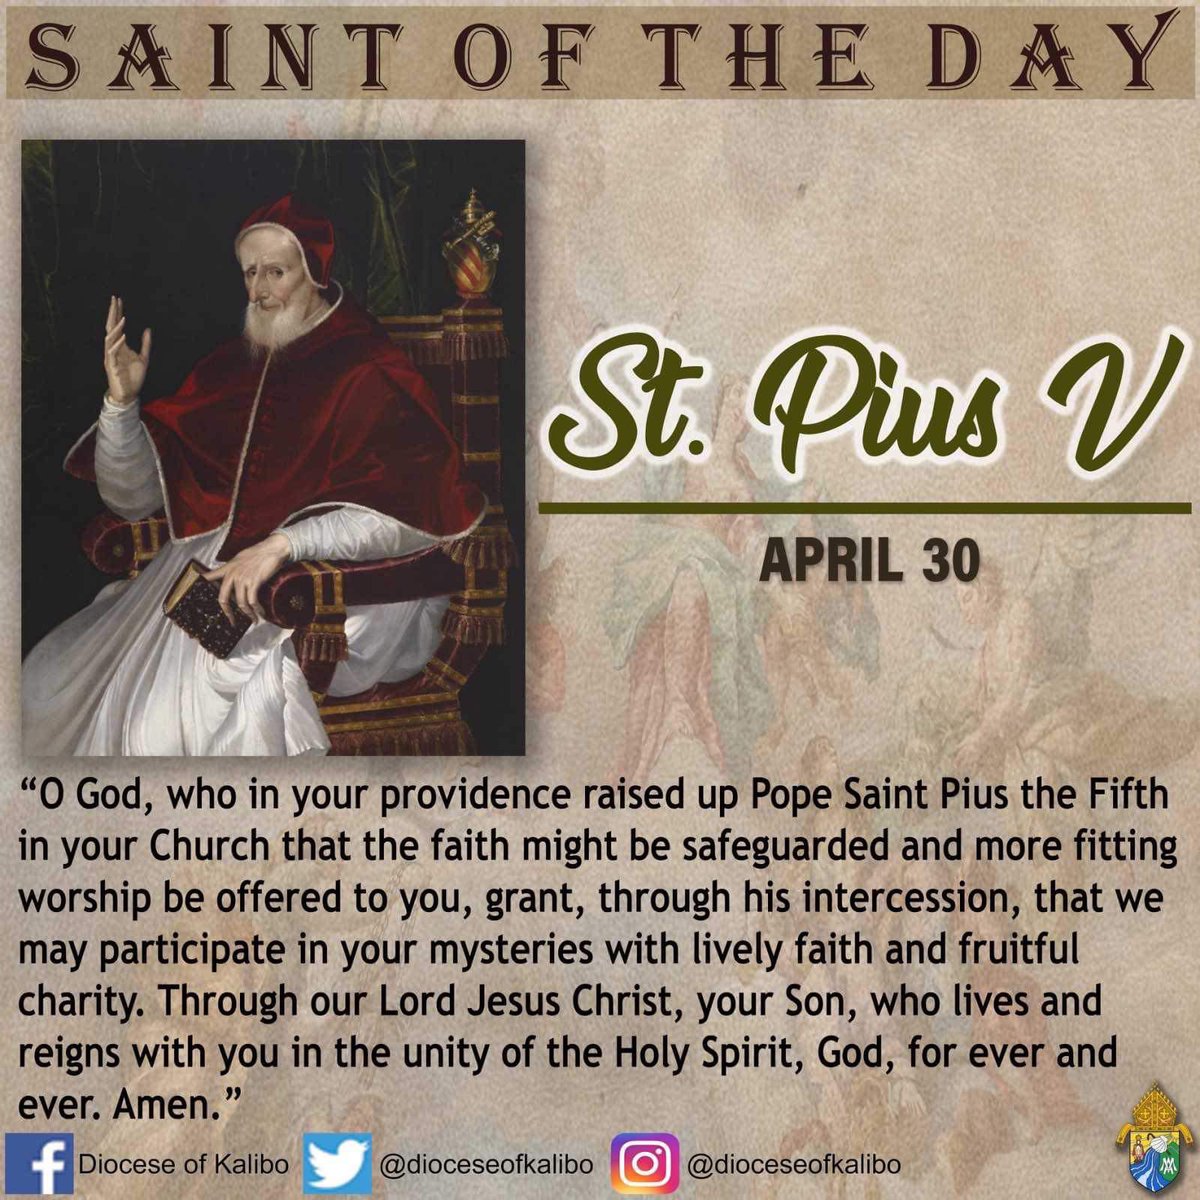 SAINT OF THE DAY

April 30 | St. Pius V

St. Pius V, pray for us! 🙏🏻
 
#SaintOfTheDay #SaintPiusV #April30 #Socom #DioceseOfKalibo